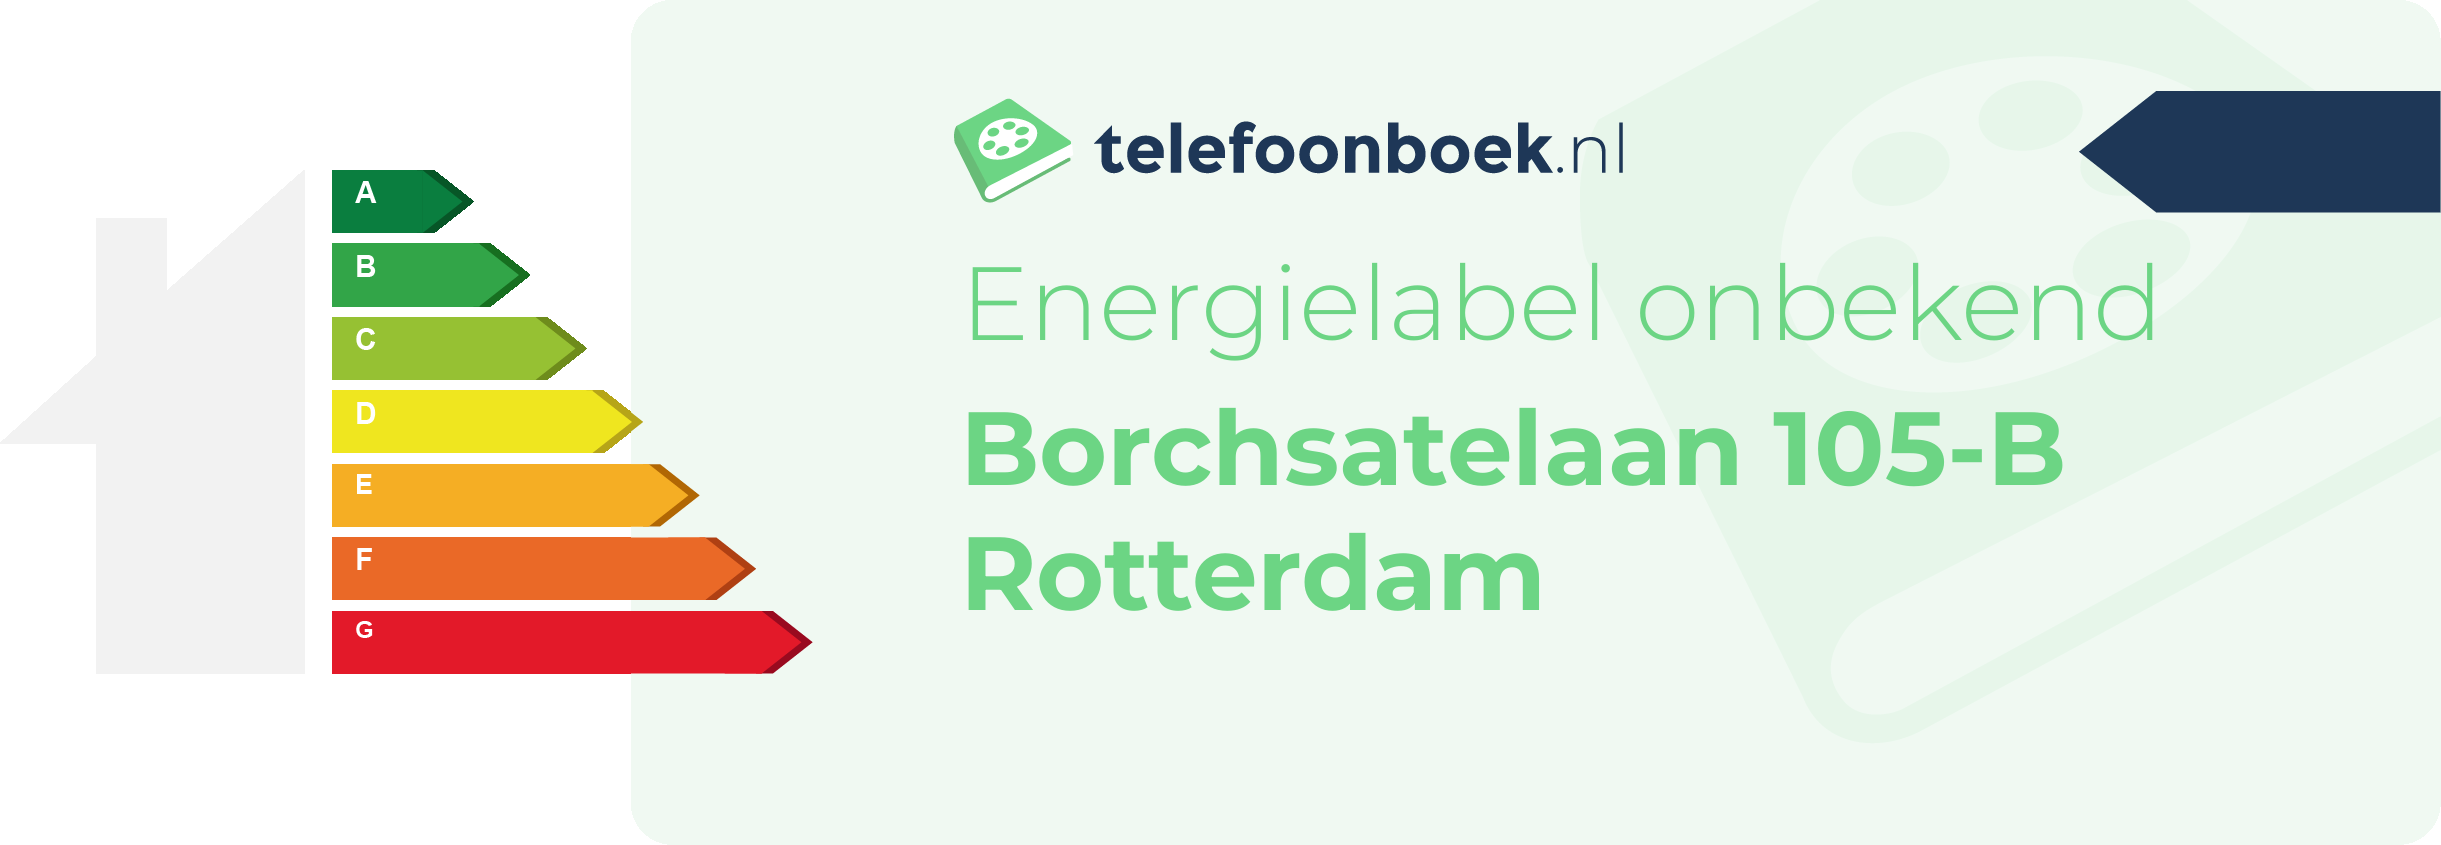 Energielabel Borchsatelaan 105-B Rotterdam